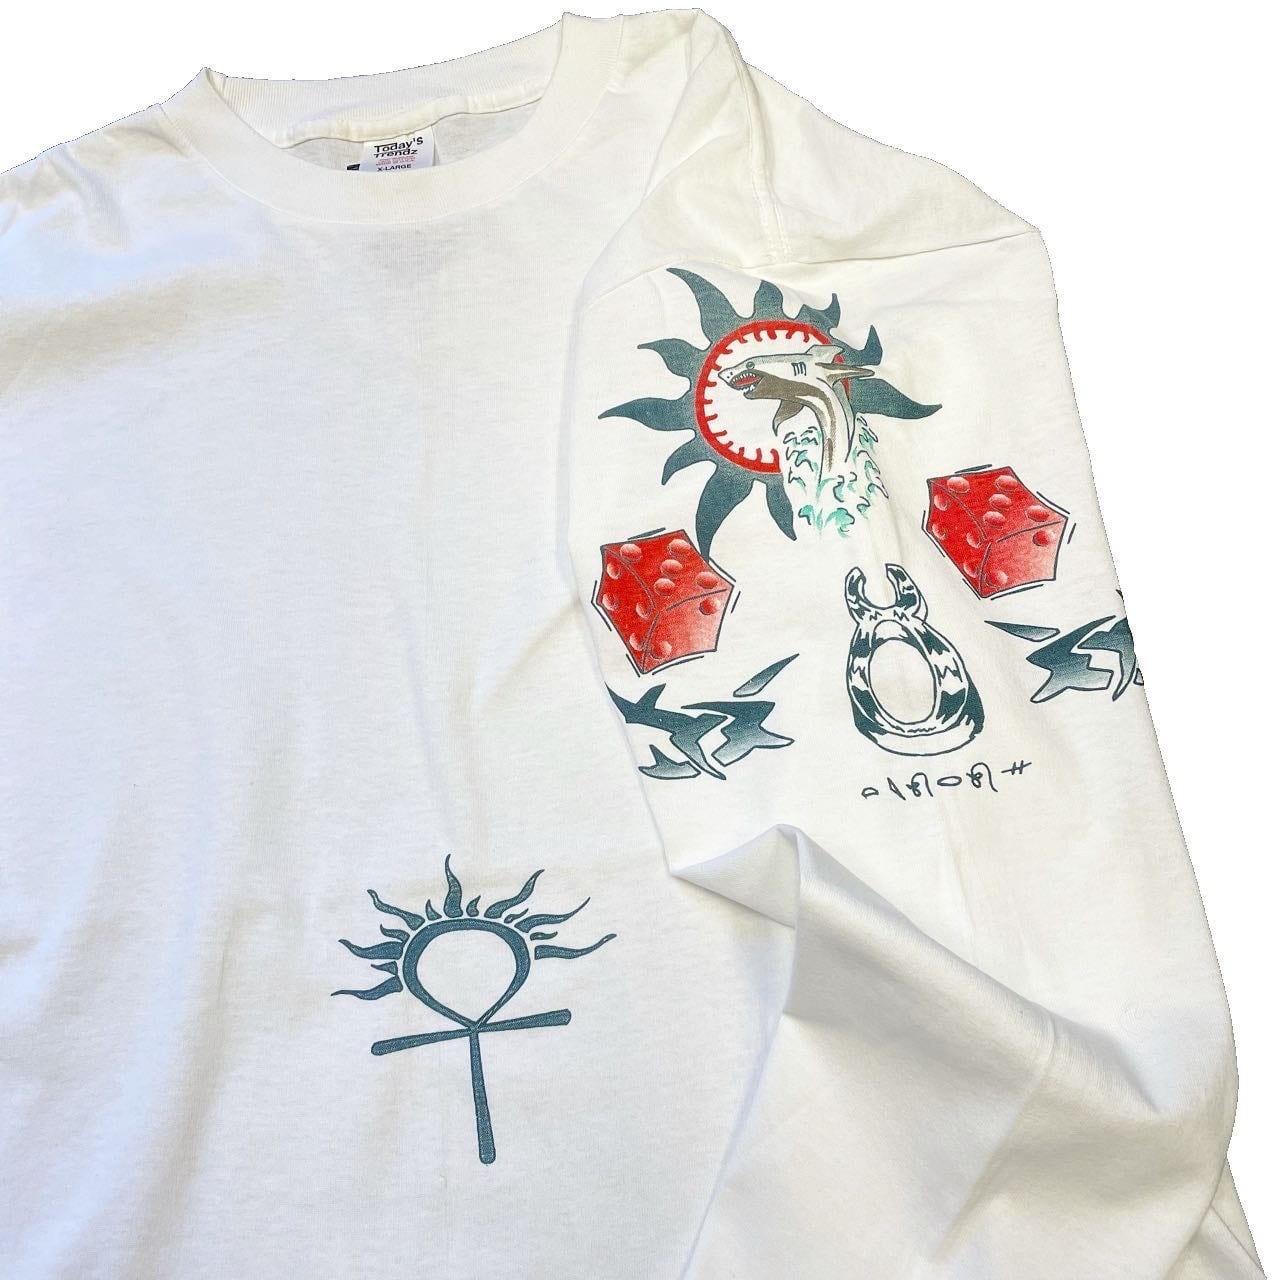 90's~ TODAY'S TRENDZ “Dennis Rodman” Tattoo print L/S T-shirt made